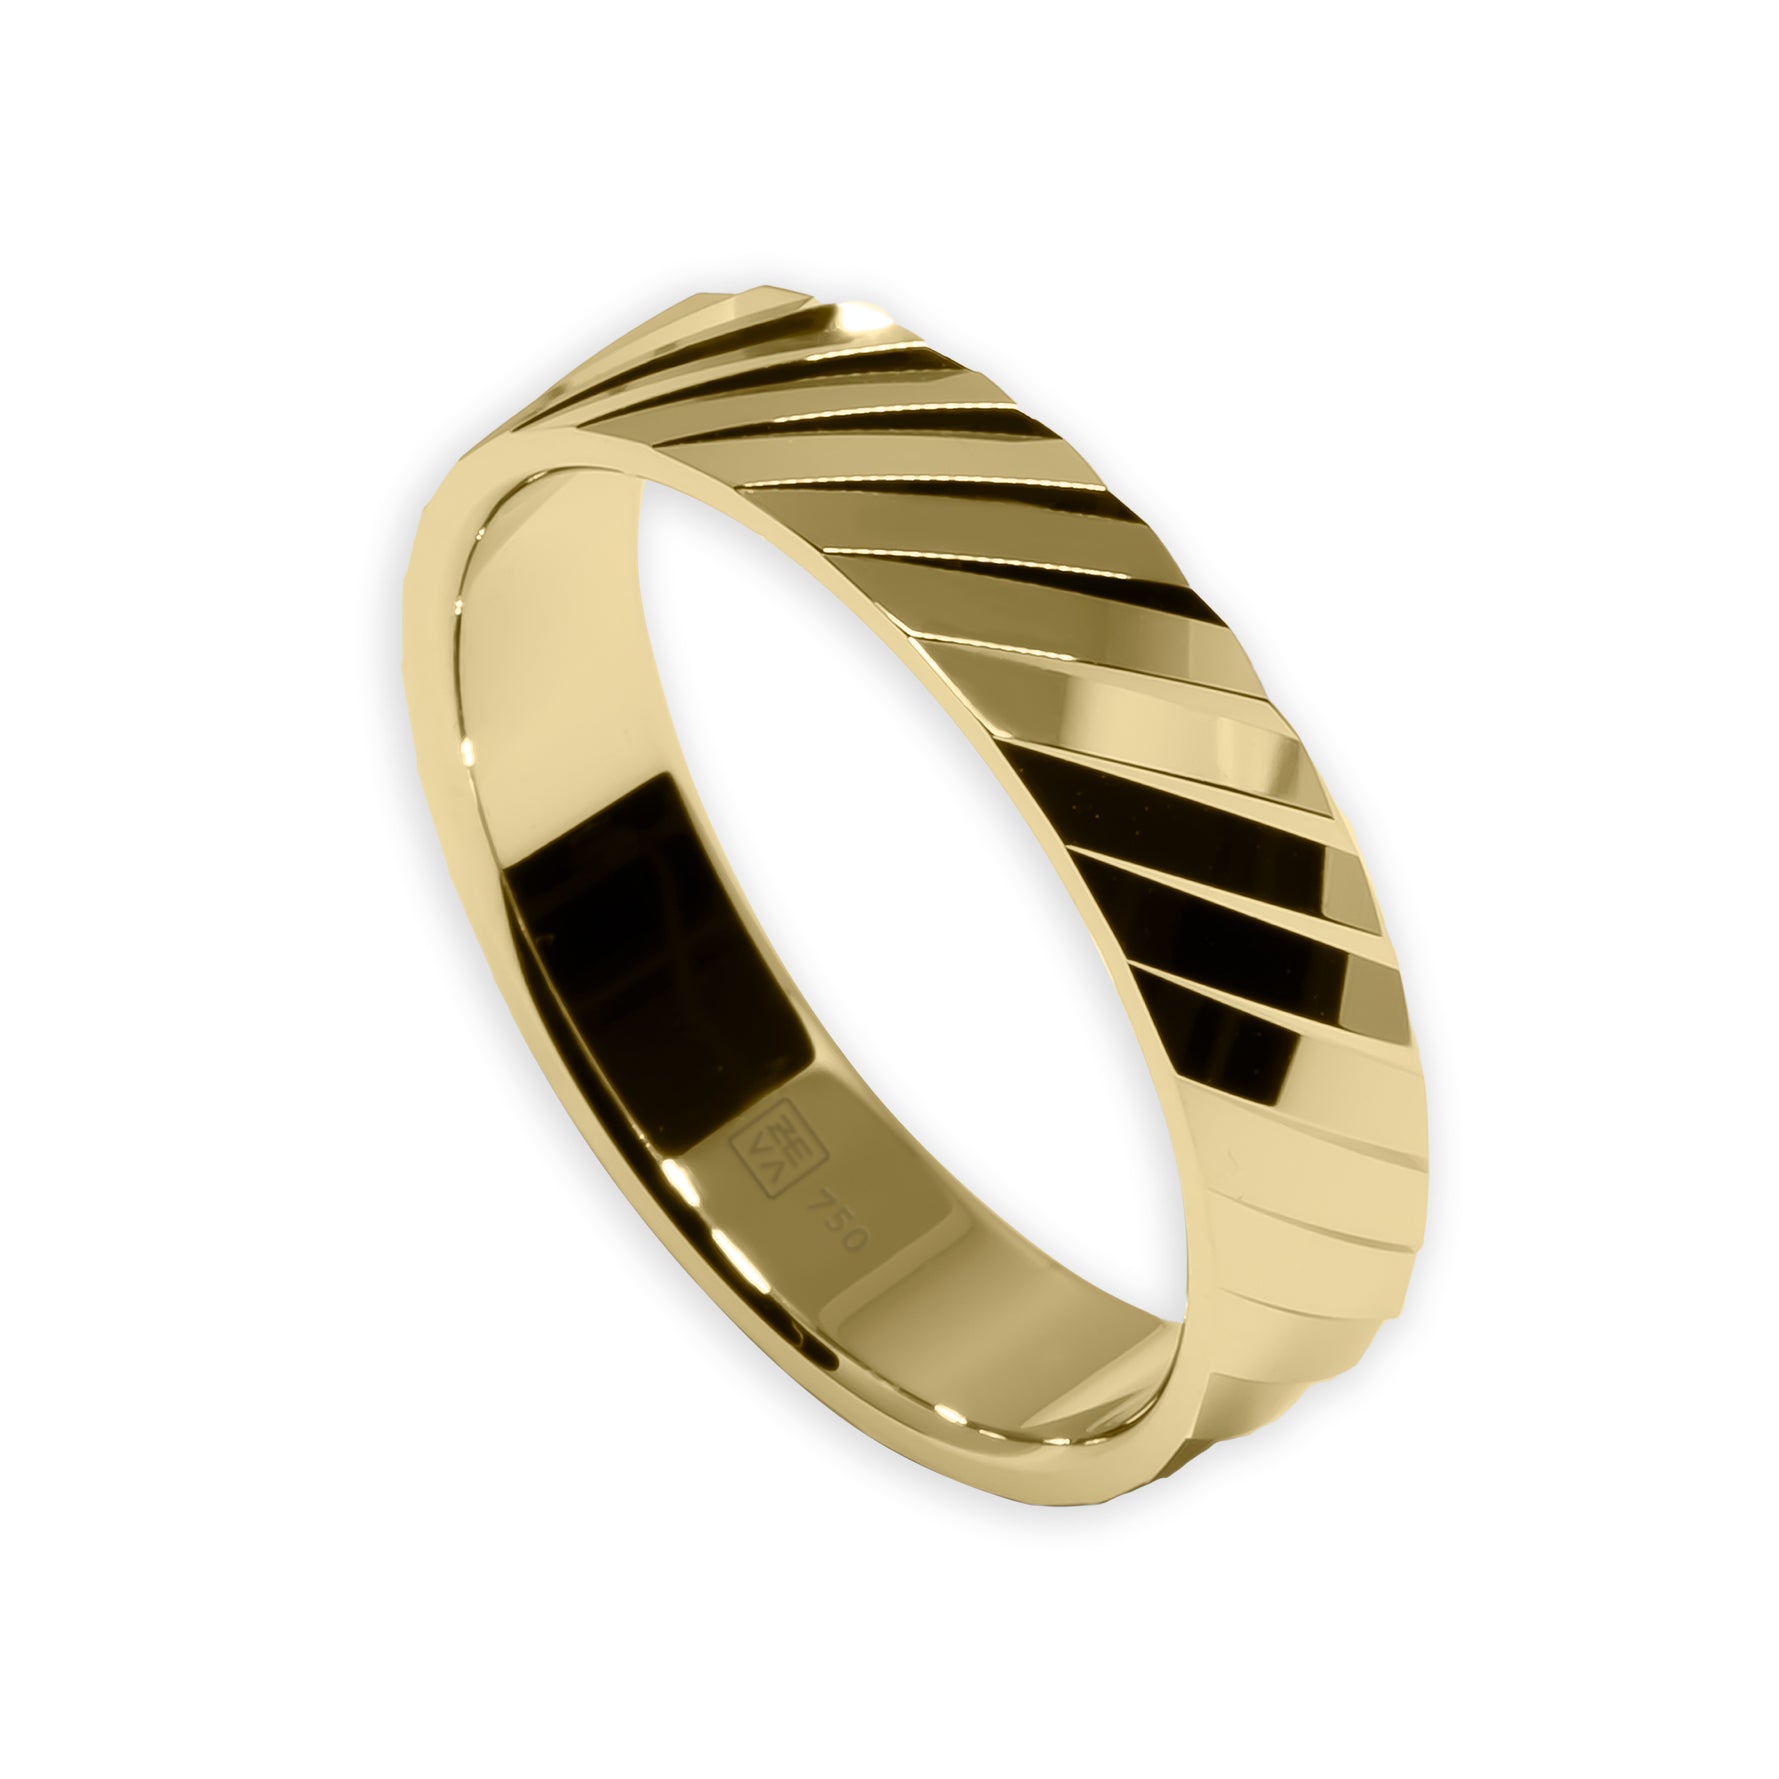 Ring CRUSH 4mm helix yellow gold 18K 750